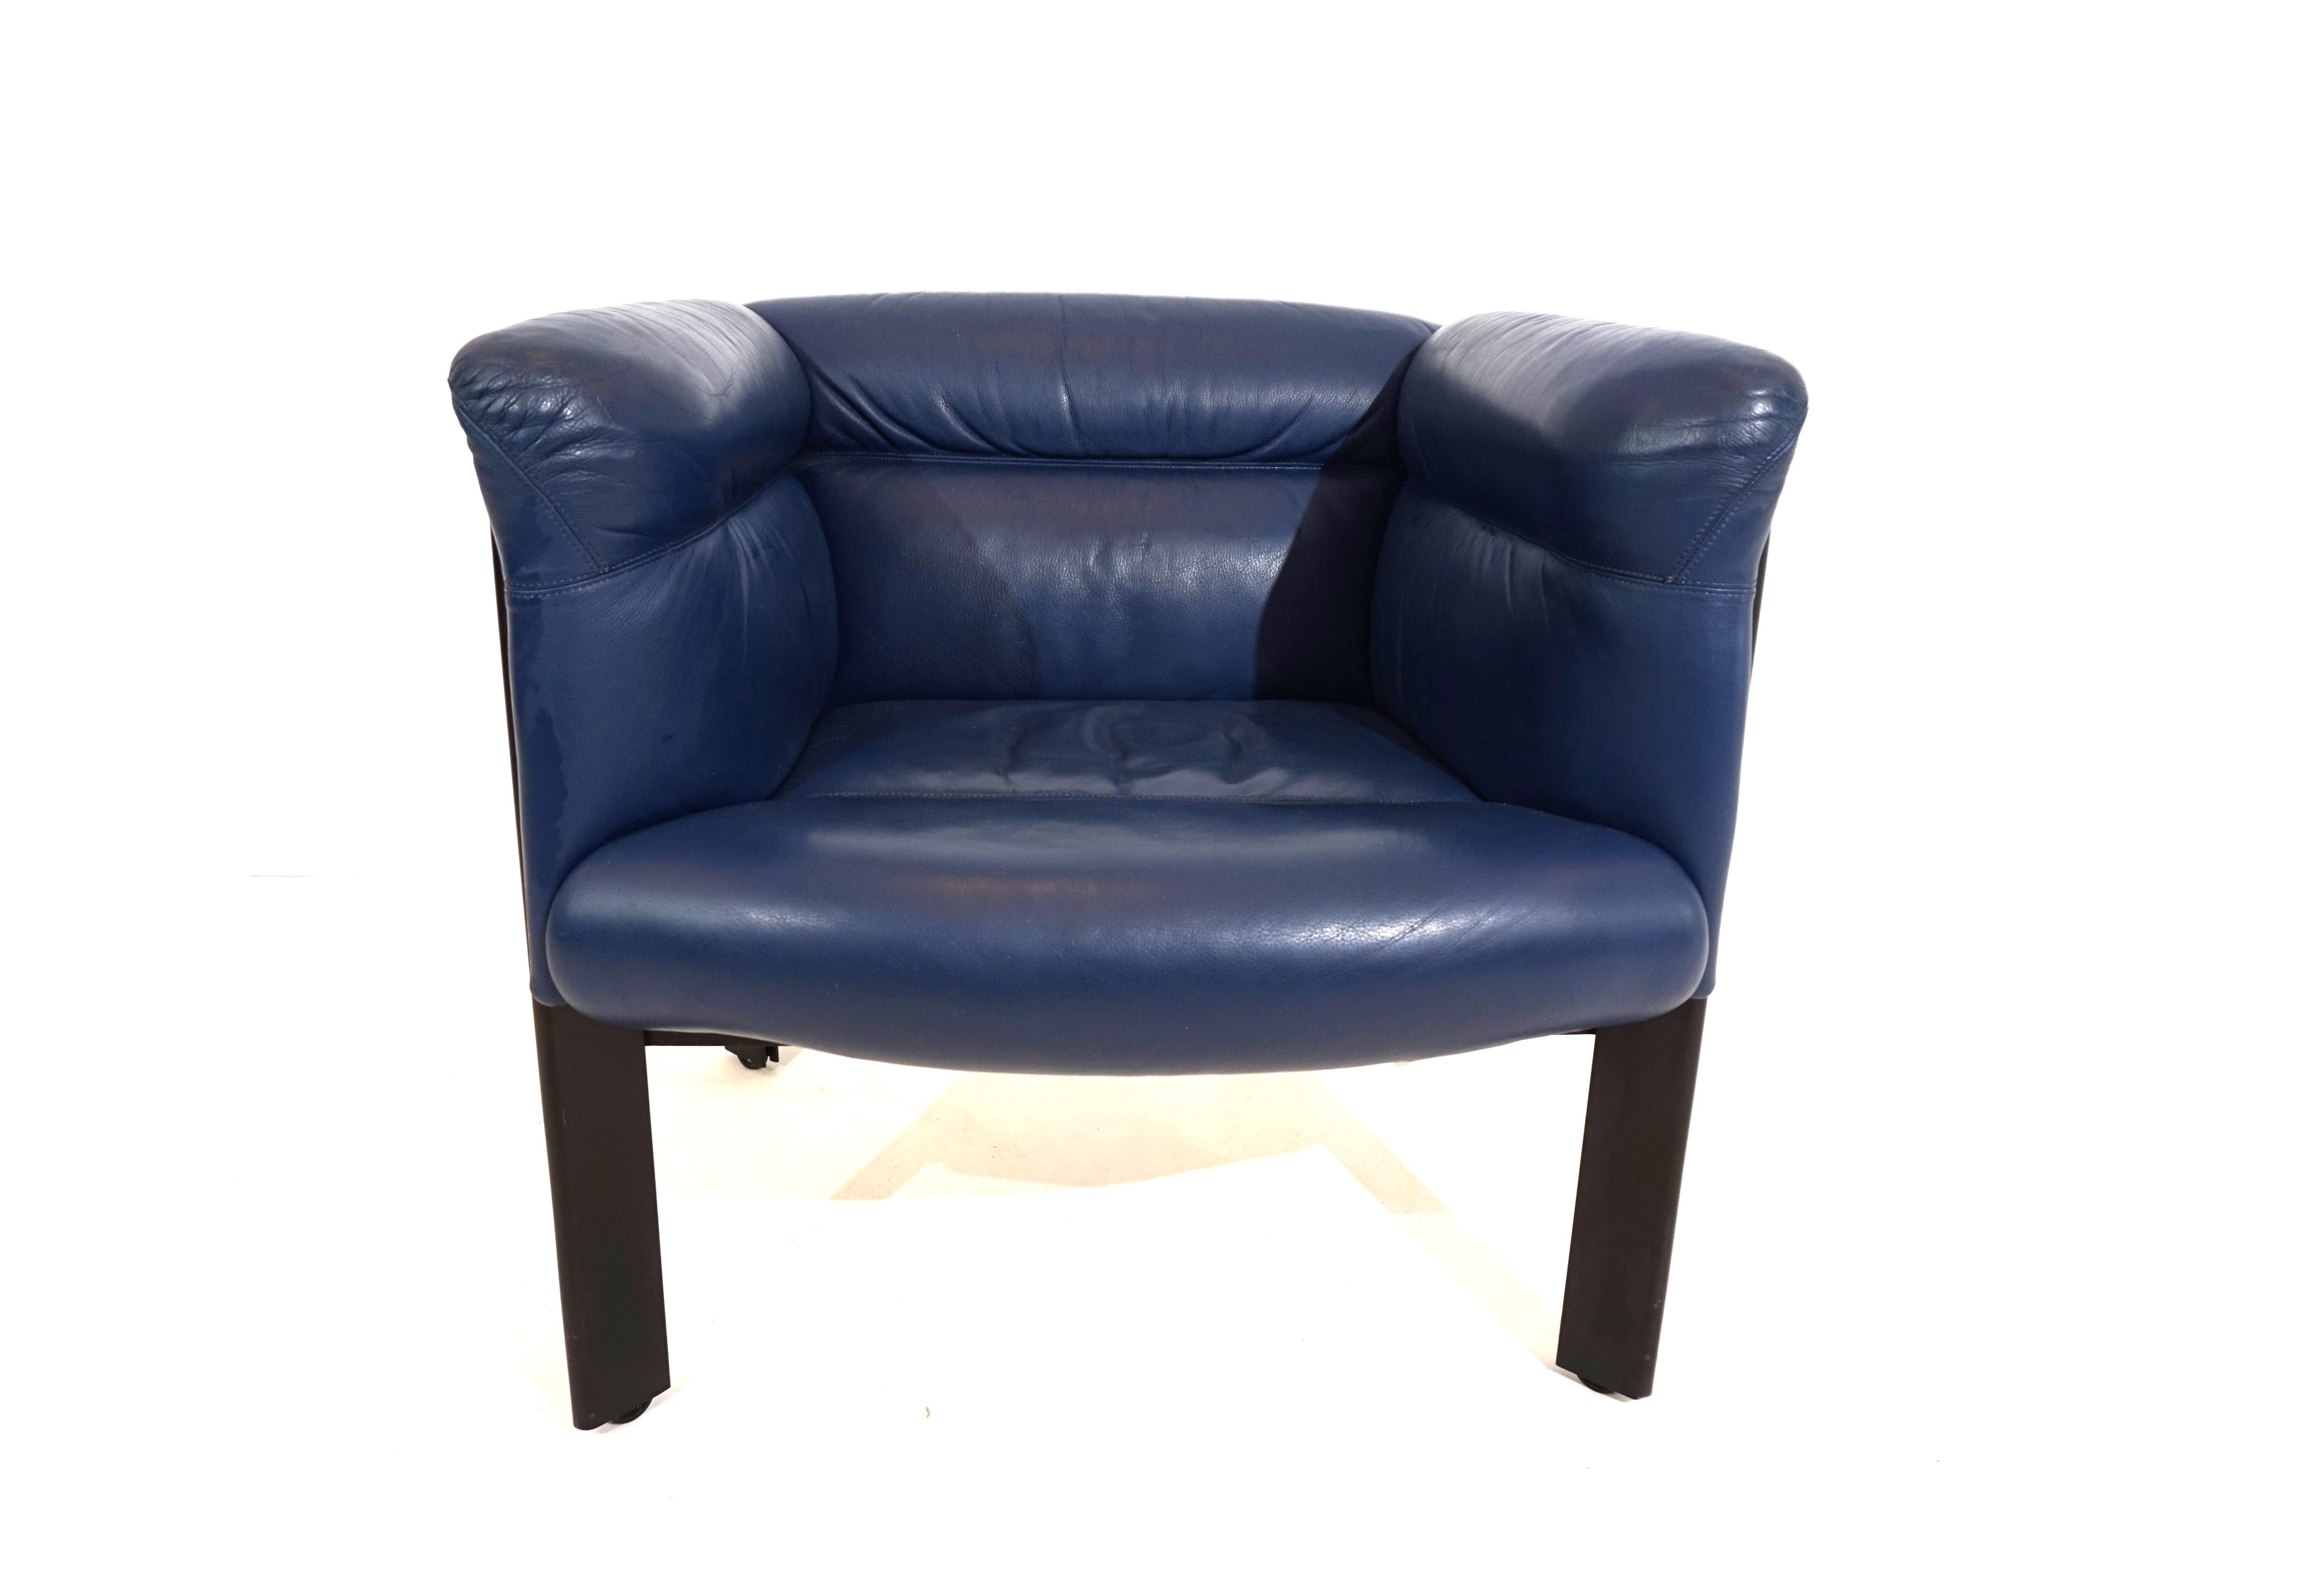 Poltrona Frau Interlude leather armchair by Marco Zanuso For Sale 9